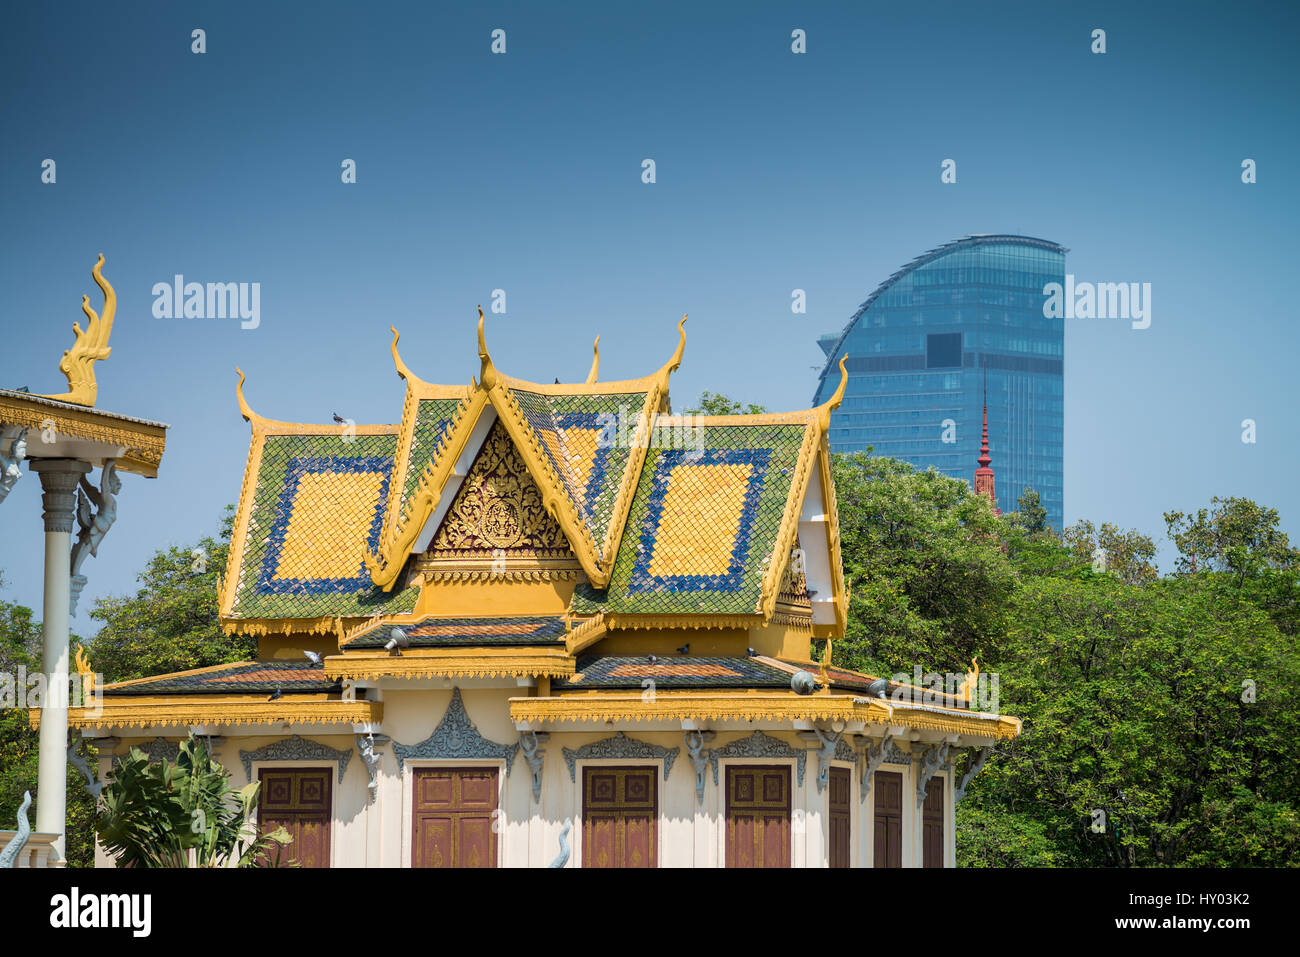 Fassade des königlichen Palastes in Phnom Penh, Kambodscha, Asien Stockfoto